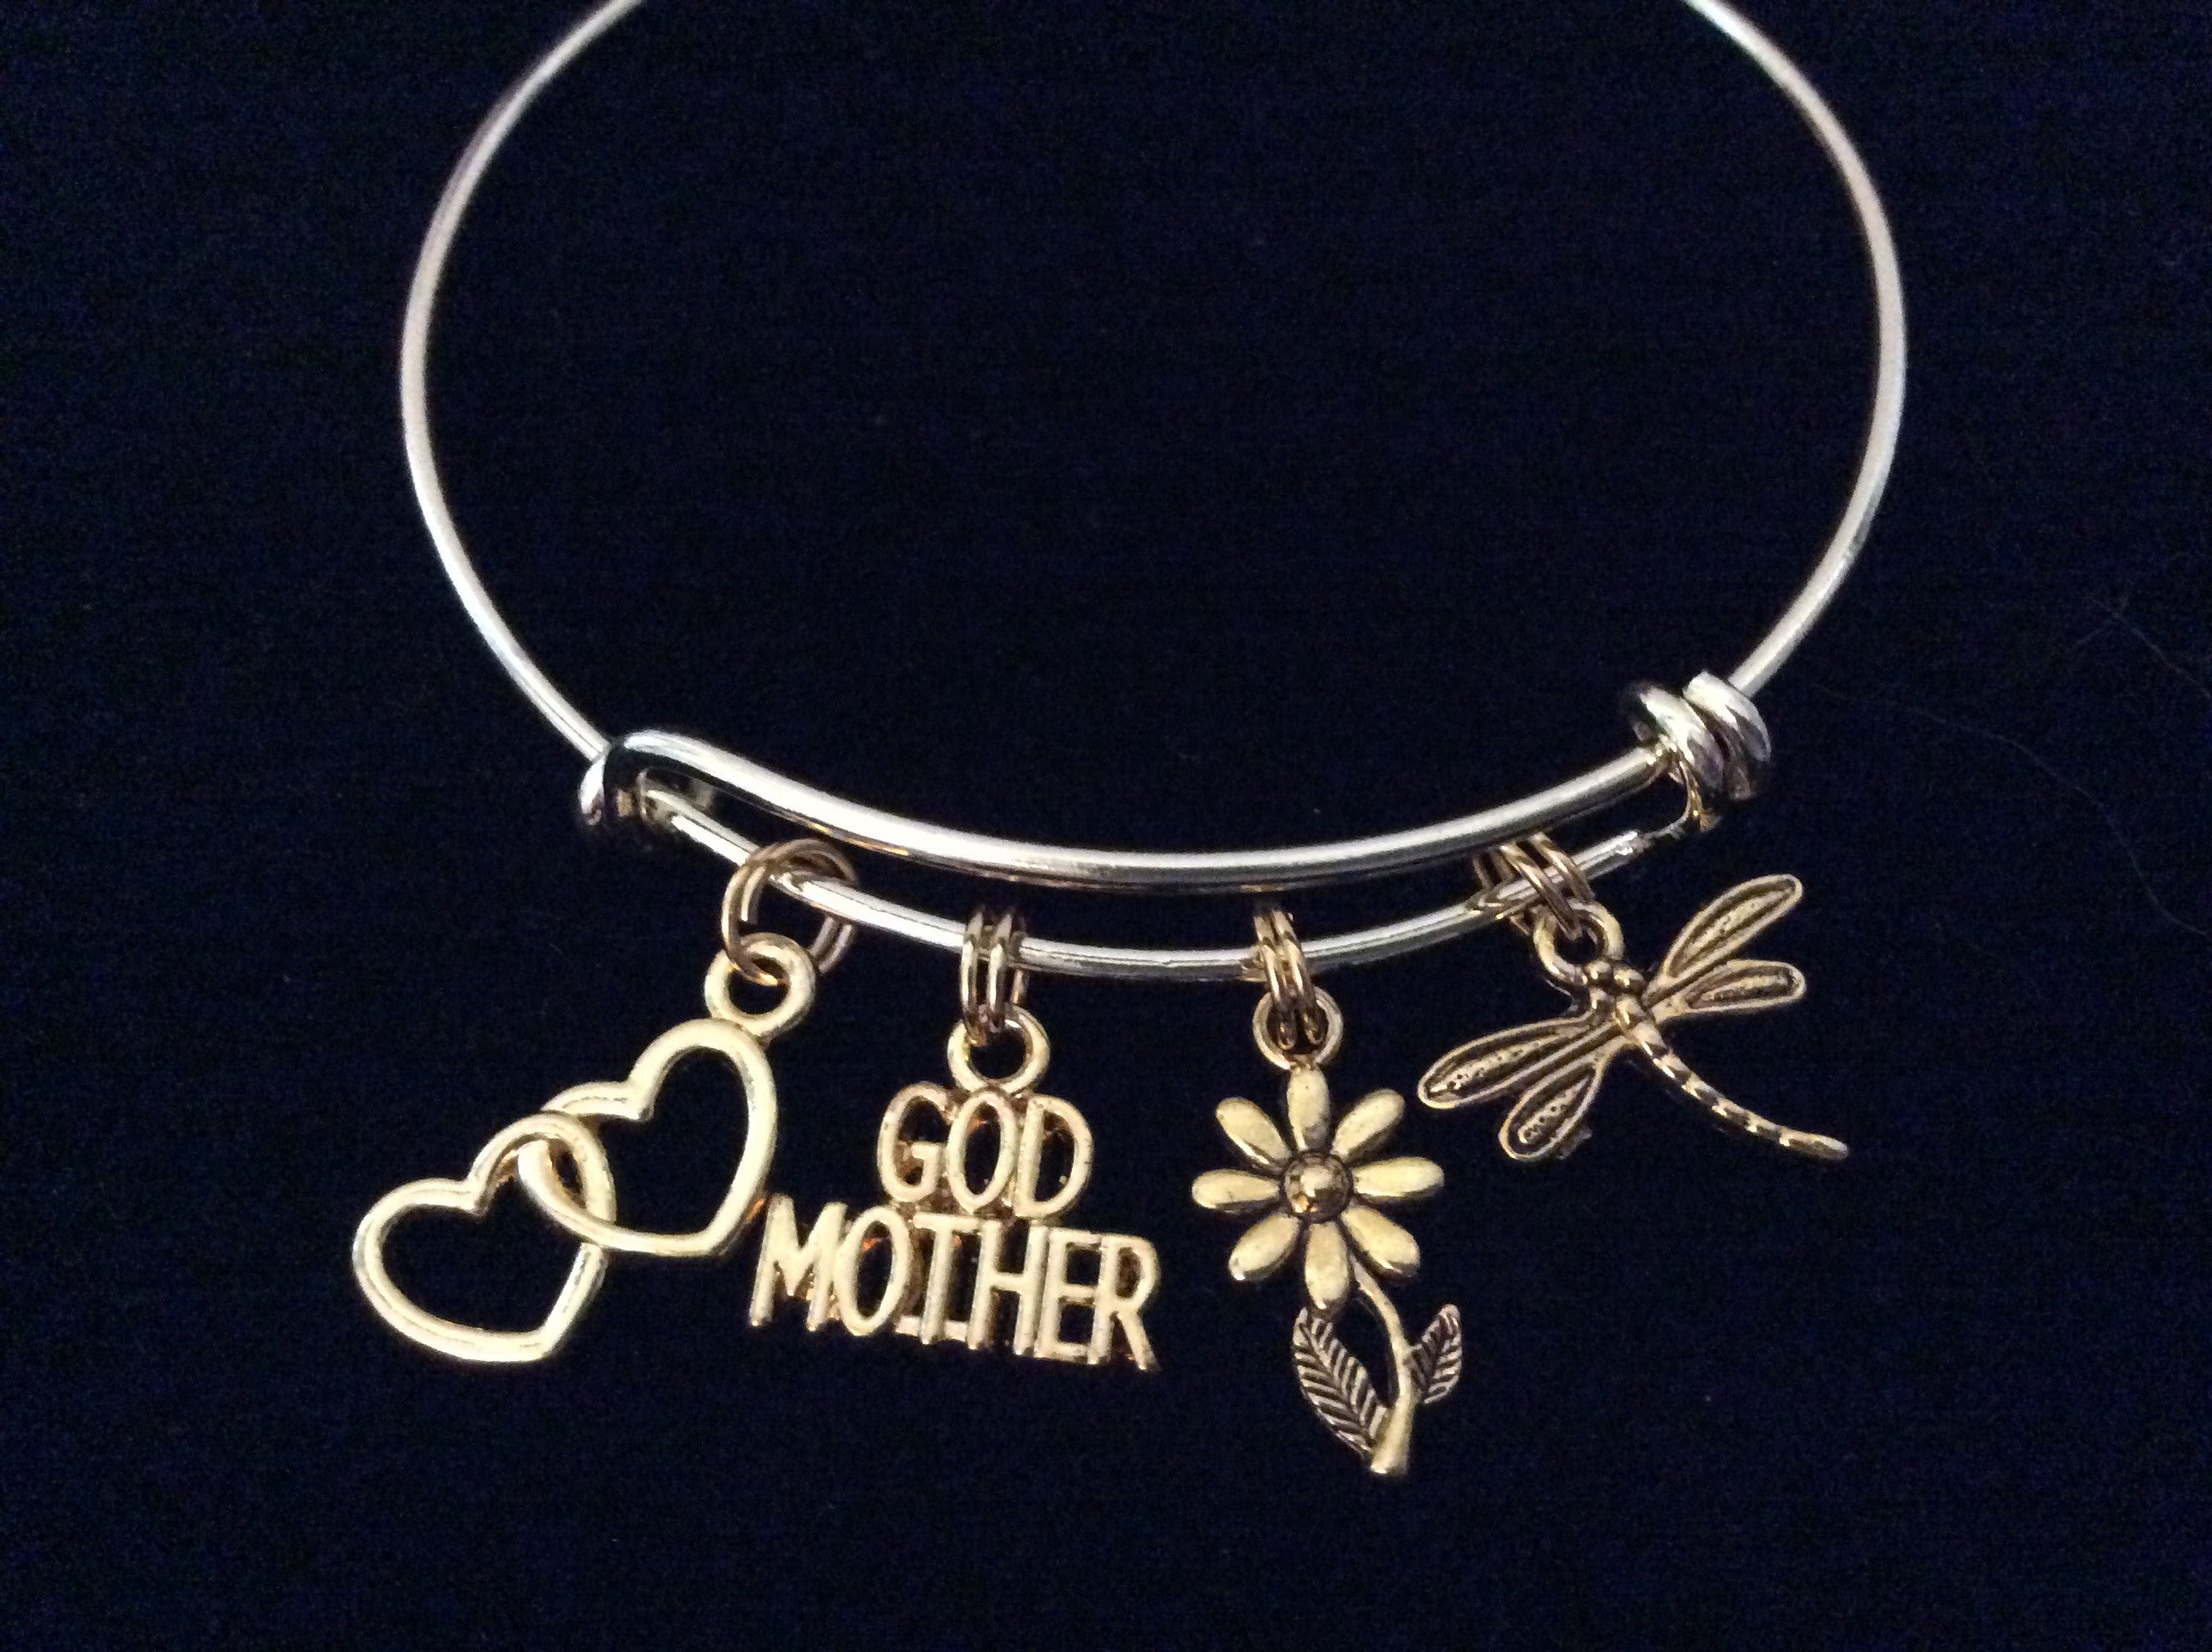 Gold Godmother Expandable Charm Bracelet Adjustable Wire Bangle 